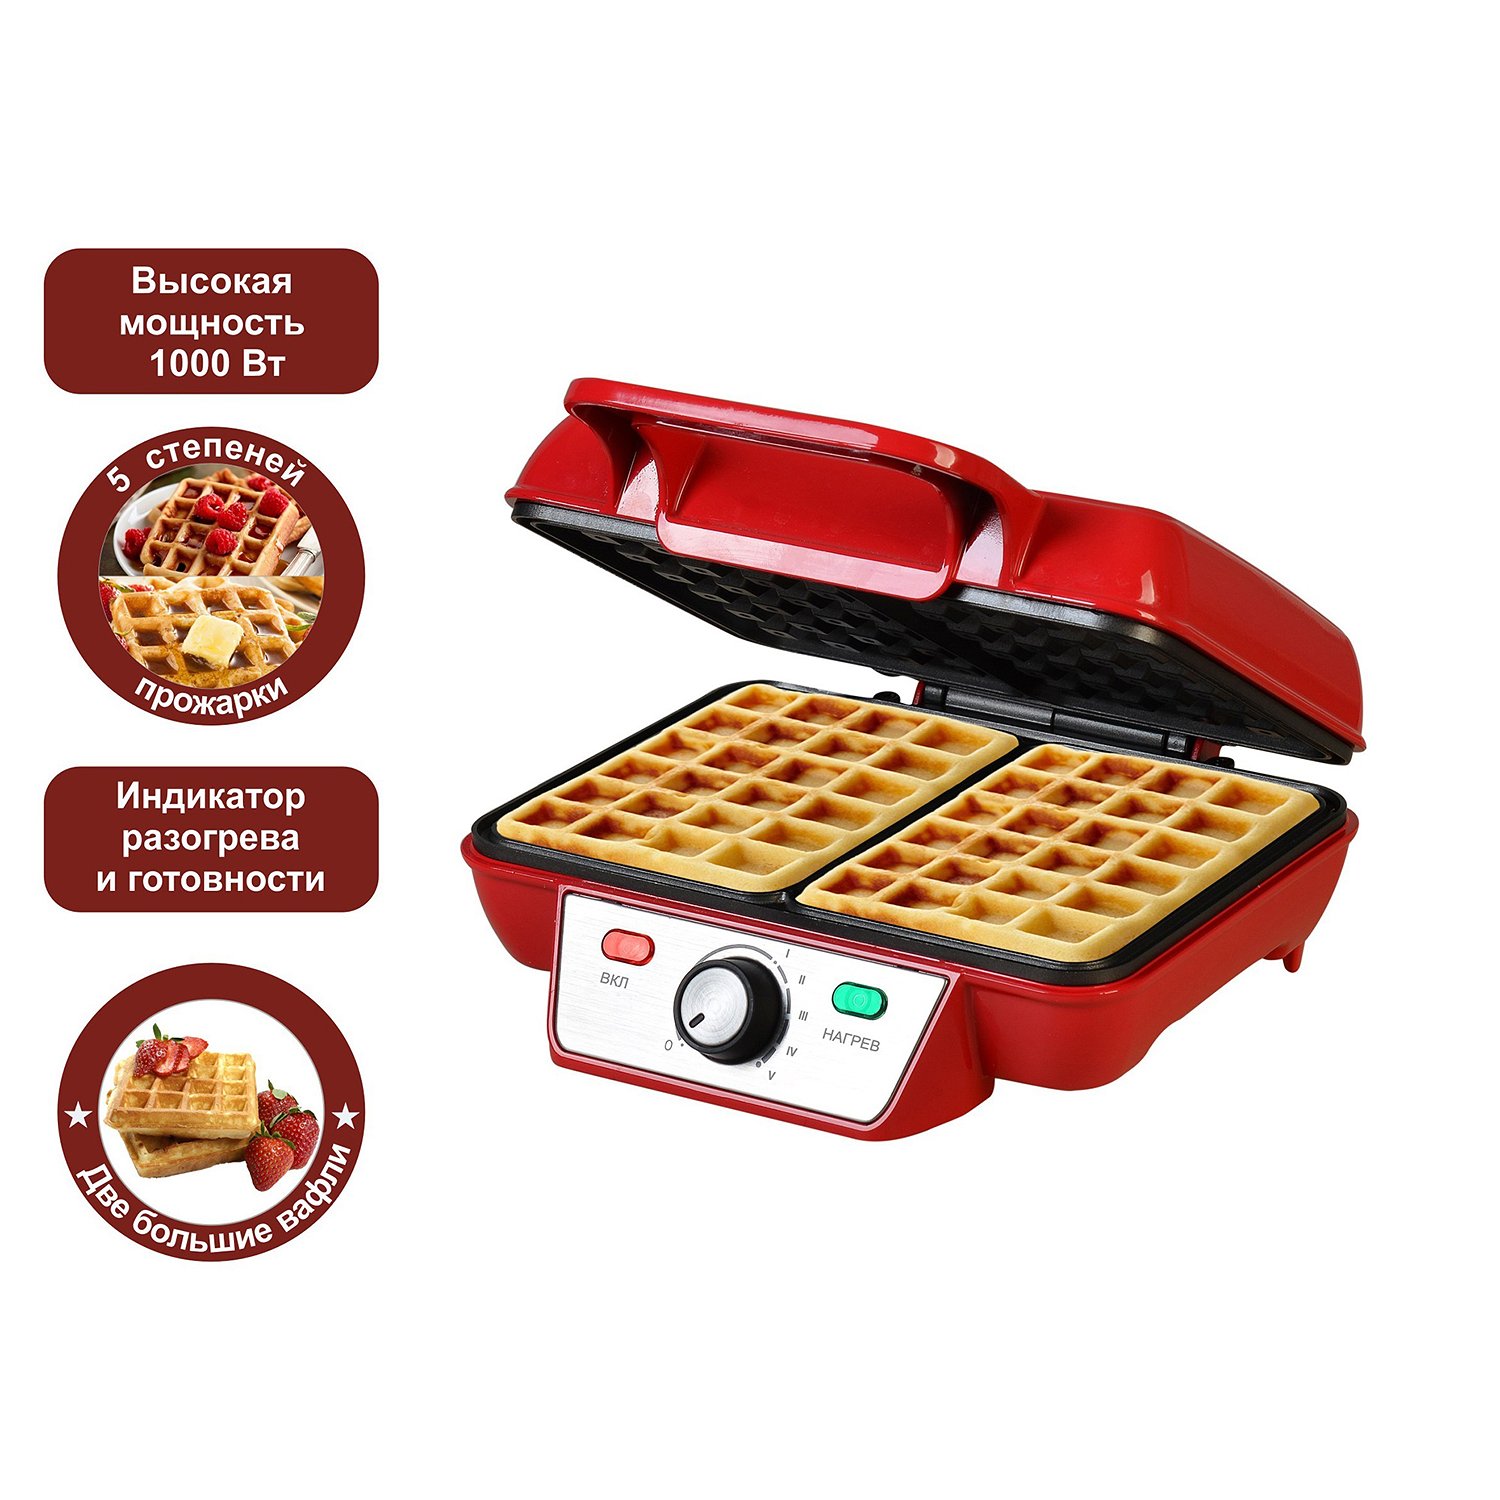  GFGRIL GFW-015 Waffle plus:  по цене 2599 ₽ в .